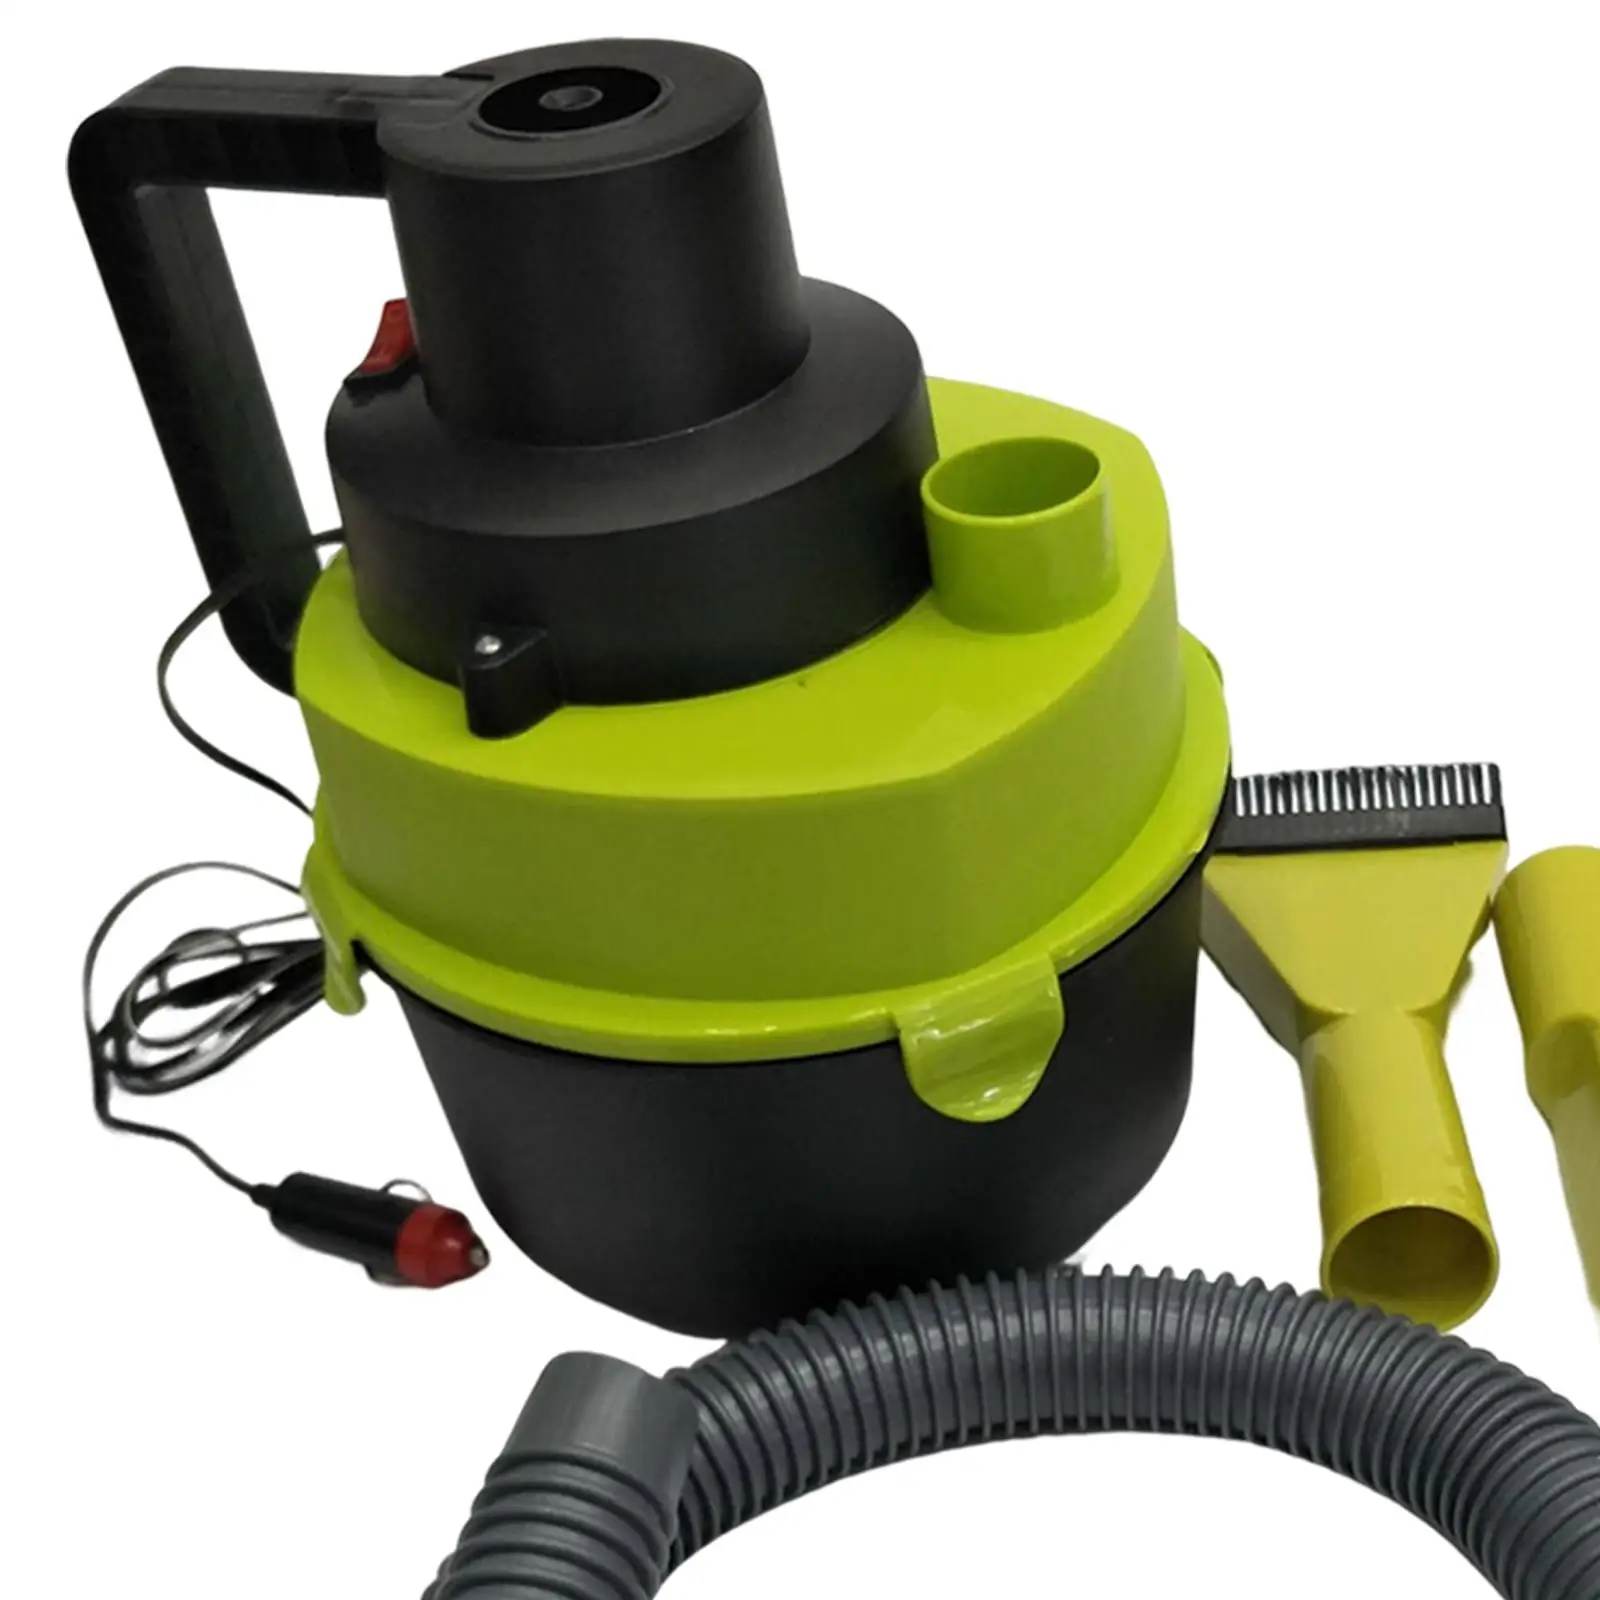 Shop Vacuum Cleaner Liquid Debris Dual Use 4L Portable Shop Vacuum with Attachments for Carpet Window Seams Trucks Cars Basement